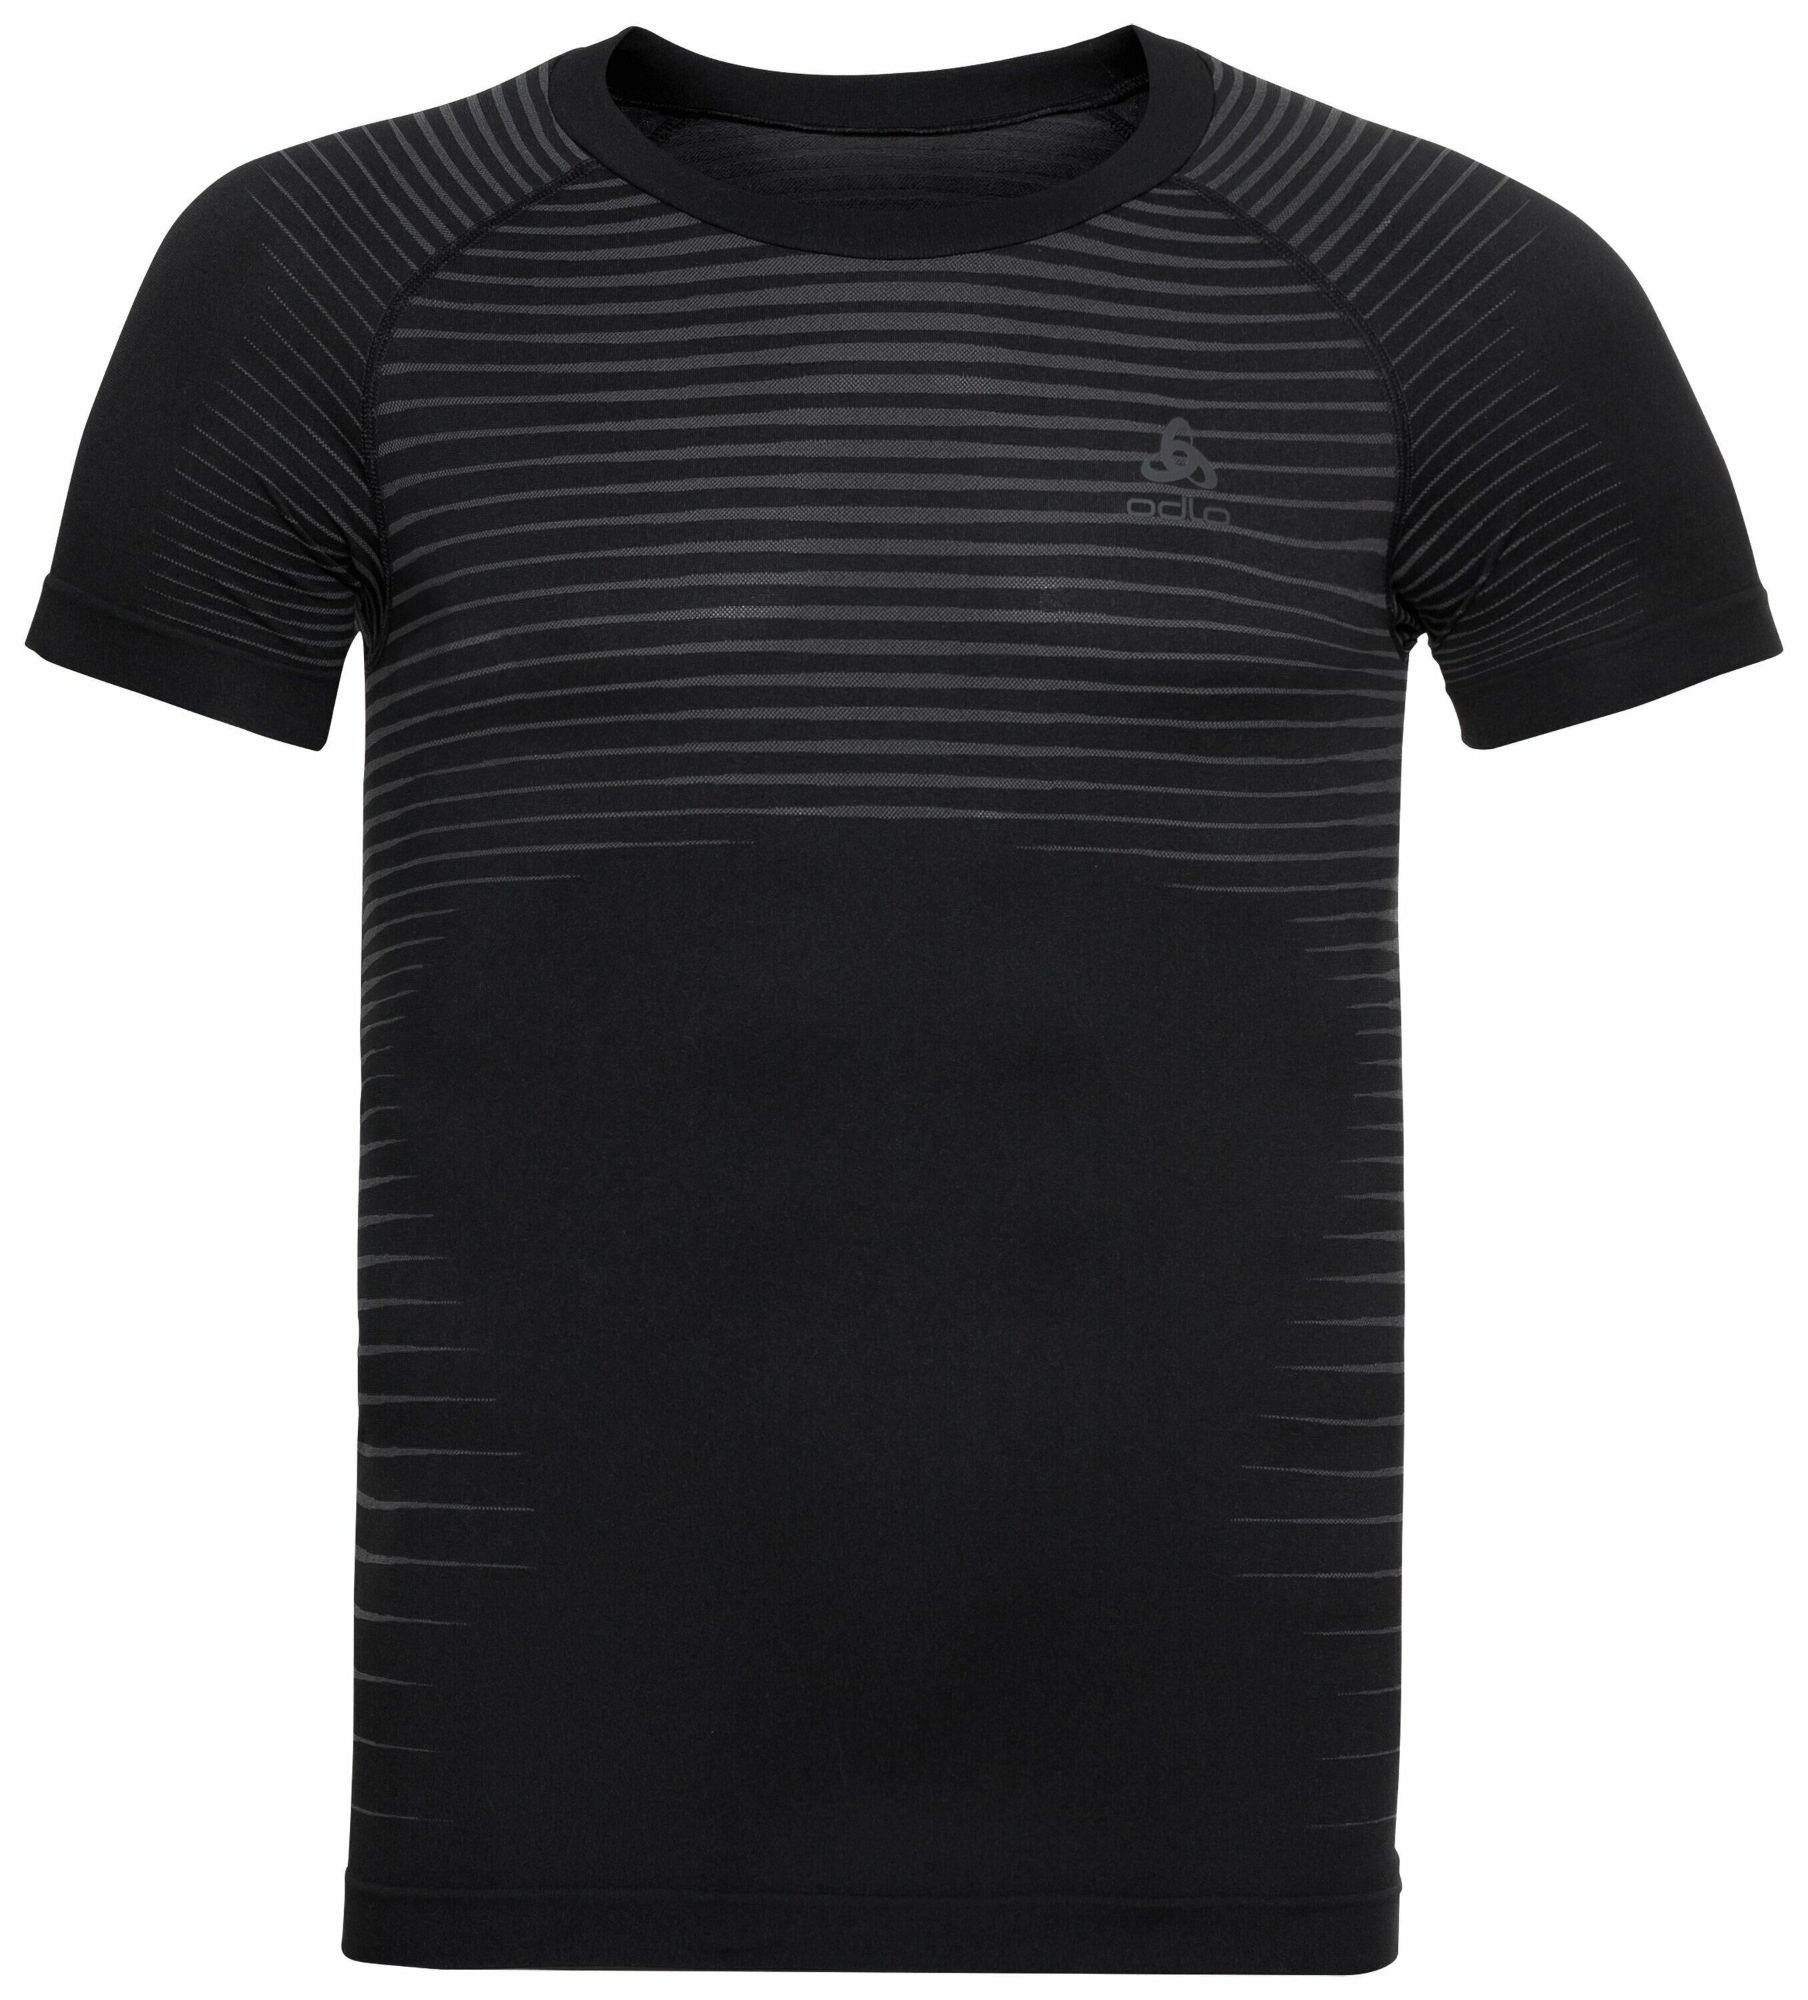 Men’s Performance Light Base Layer T-Shirt Black XL